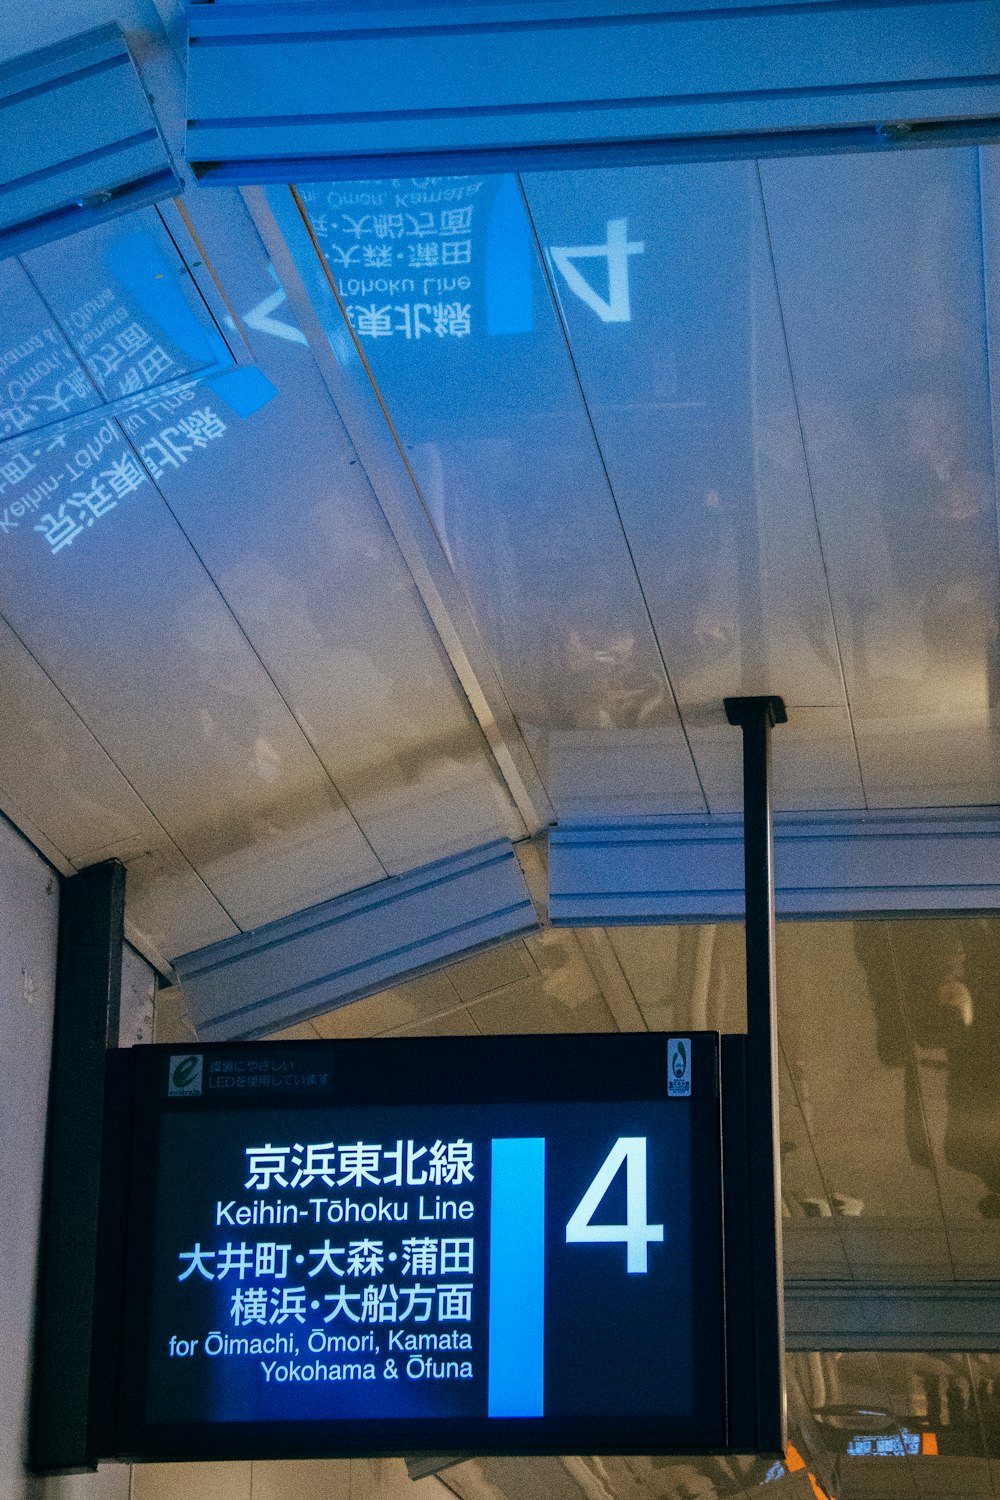 a sign in a train station that says kohin - tohoku line